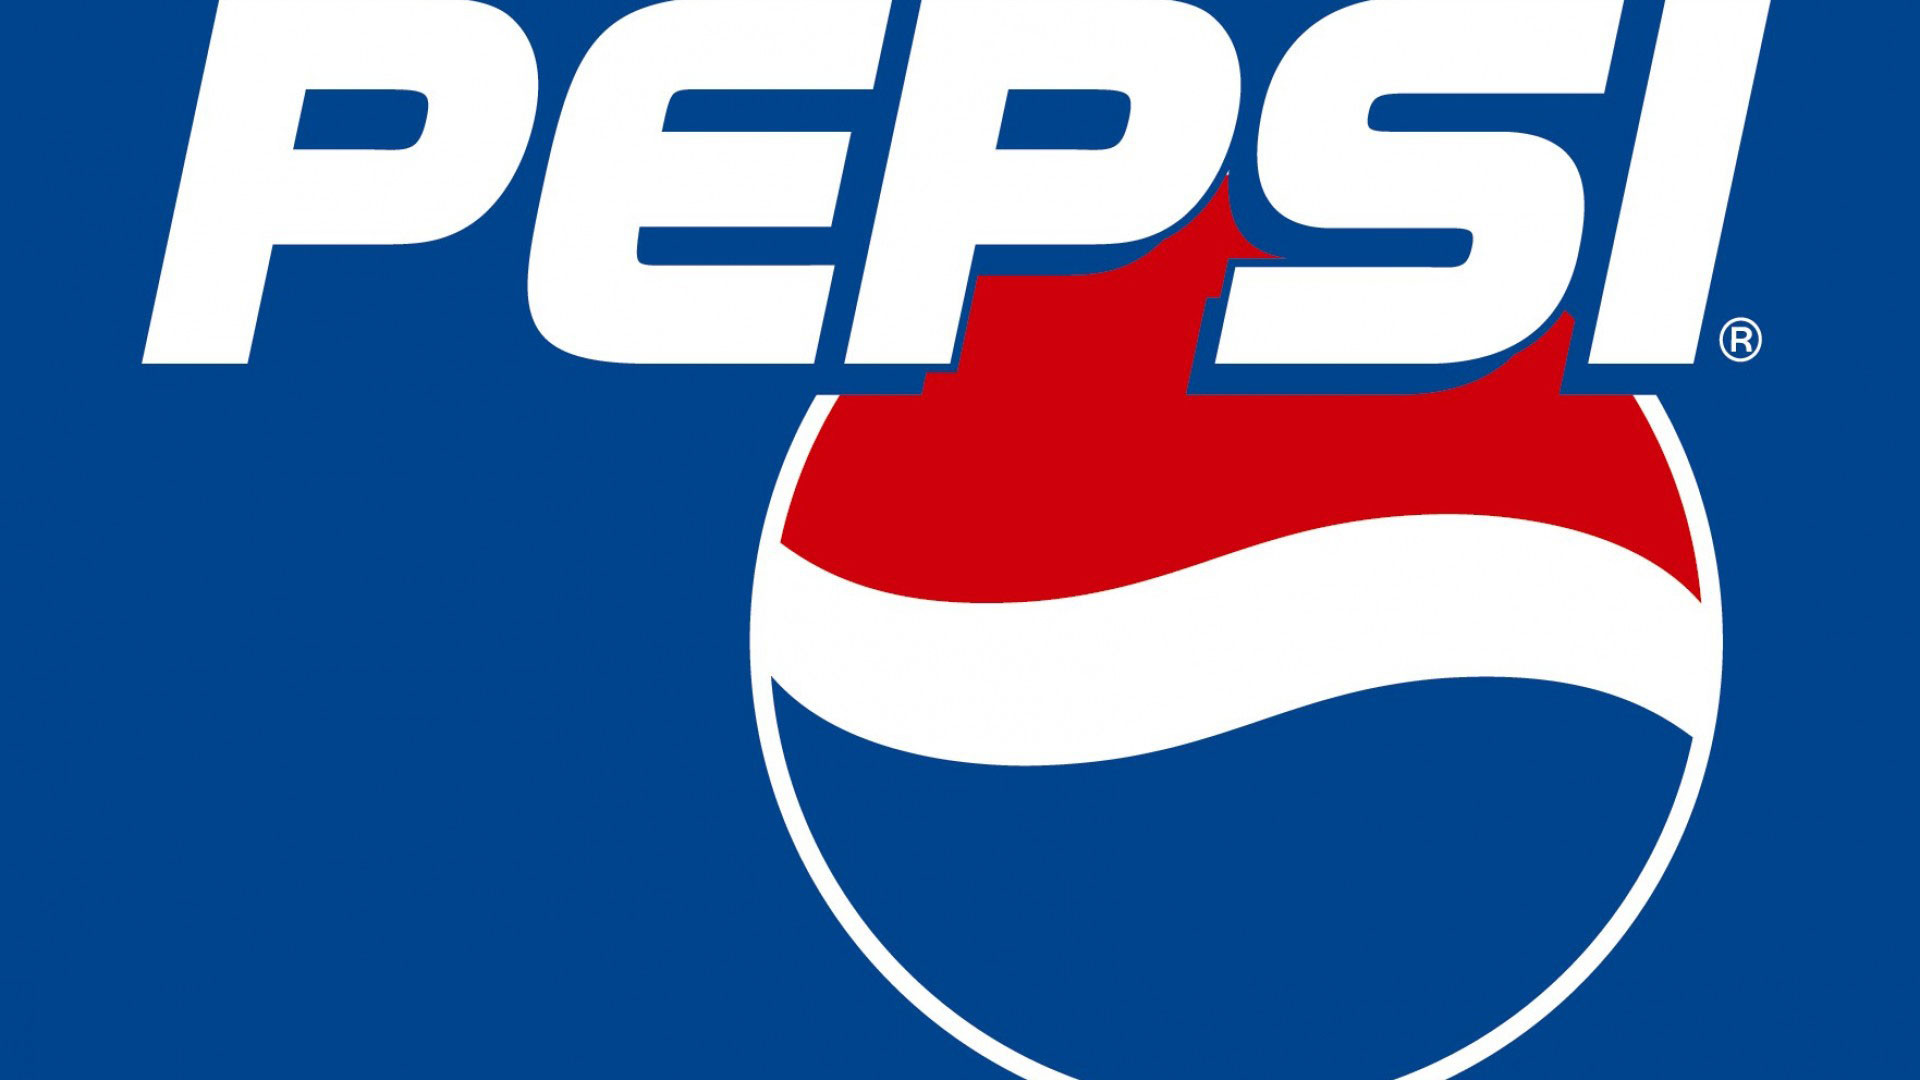 Pepsi Wallpaper (60+ pictures)